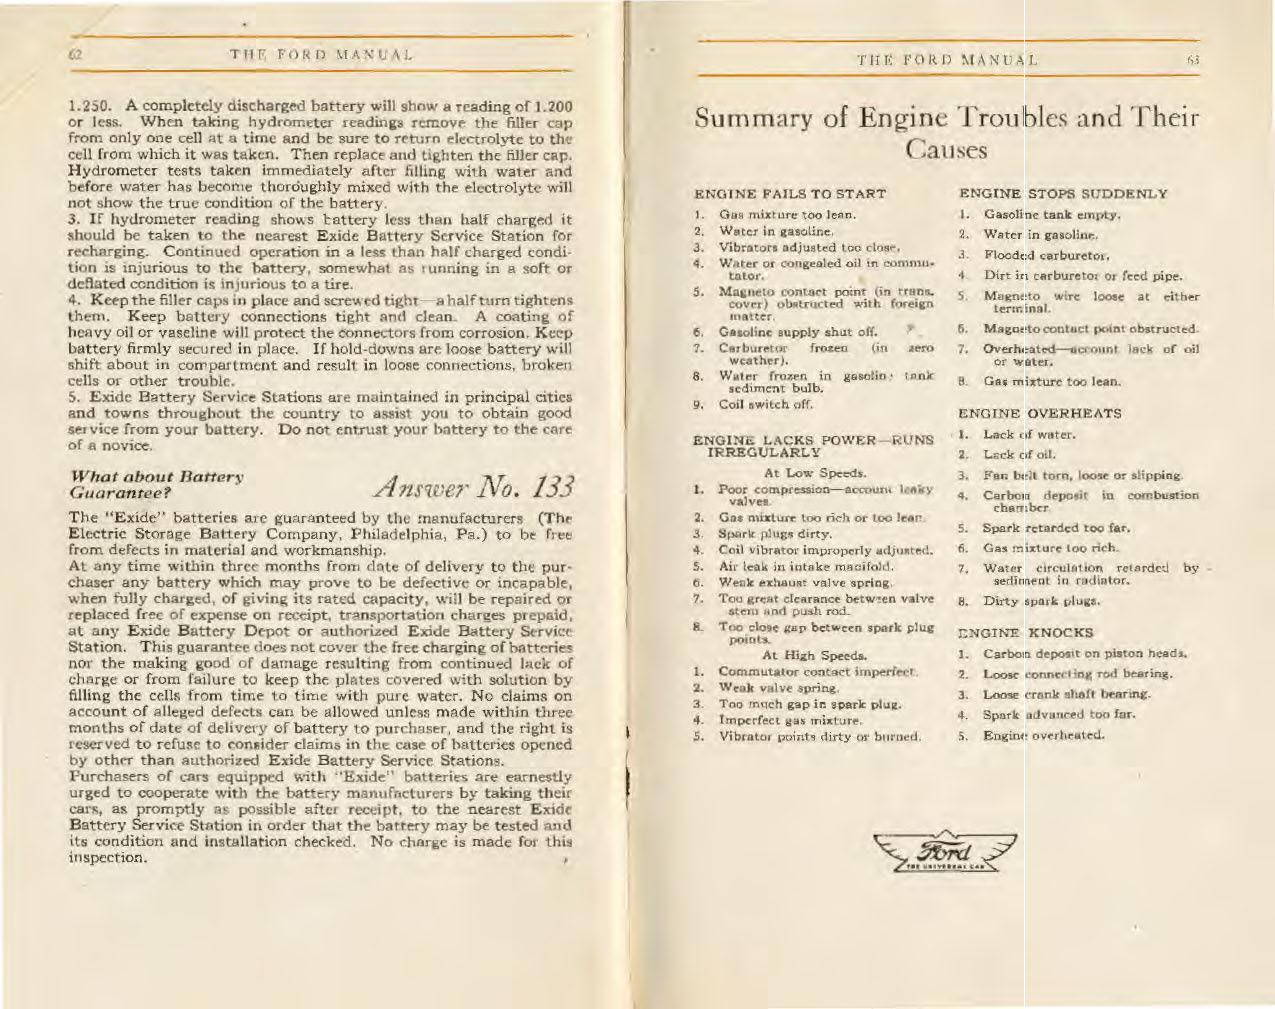 n_1919 Ford Manual-62-63.jpg